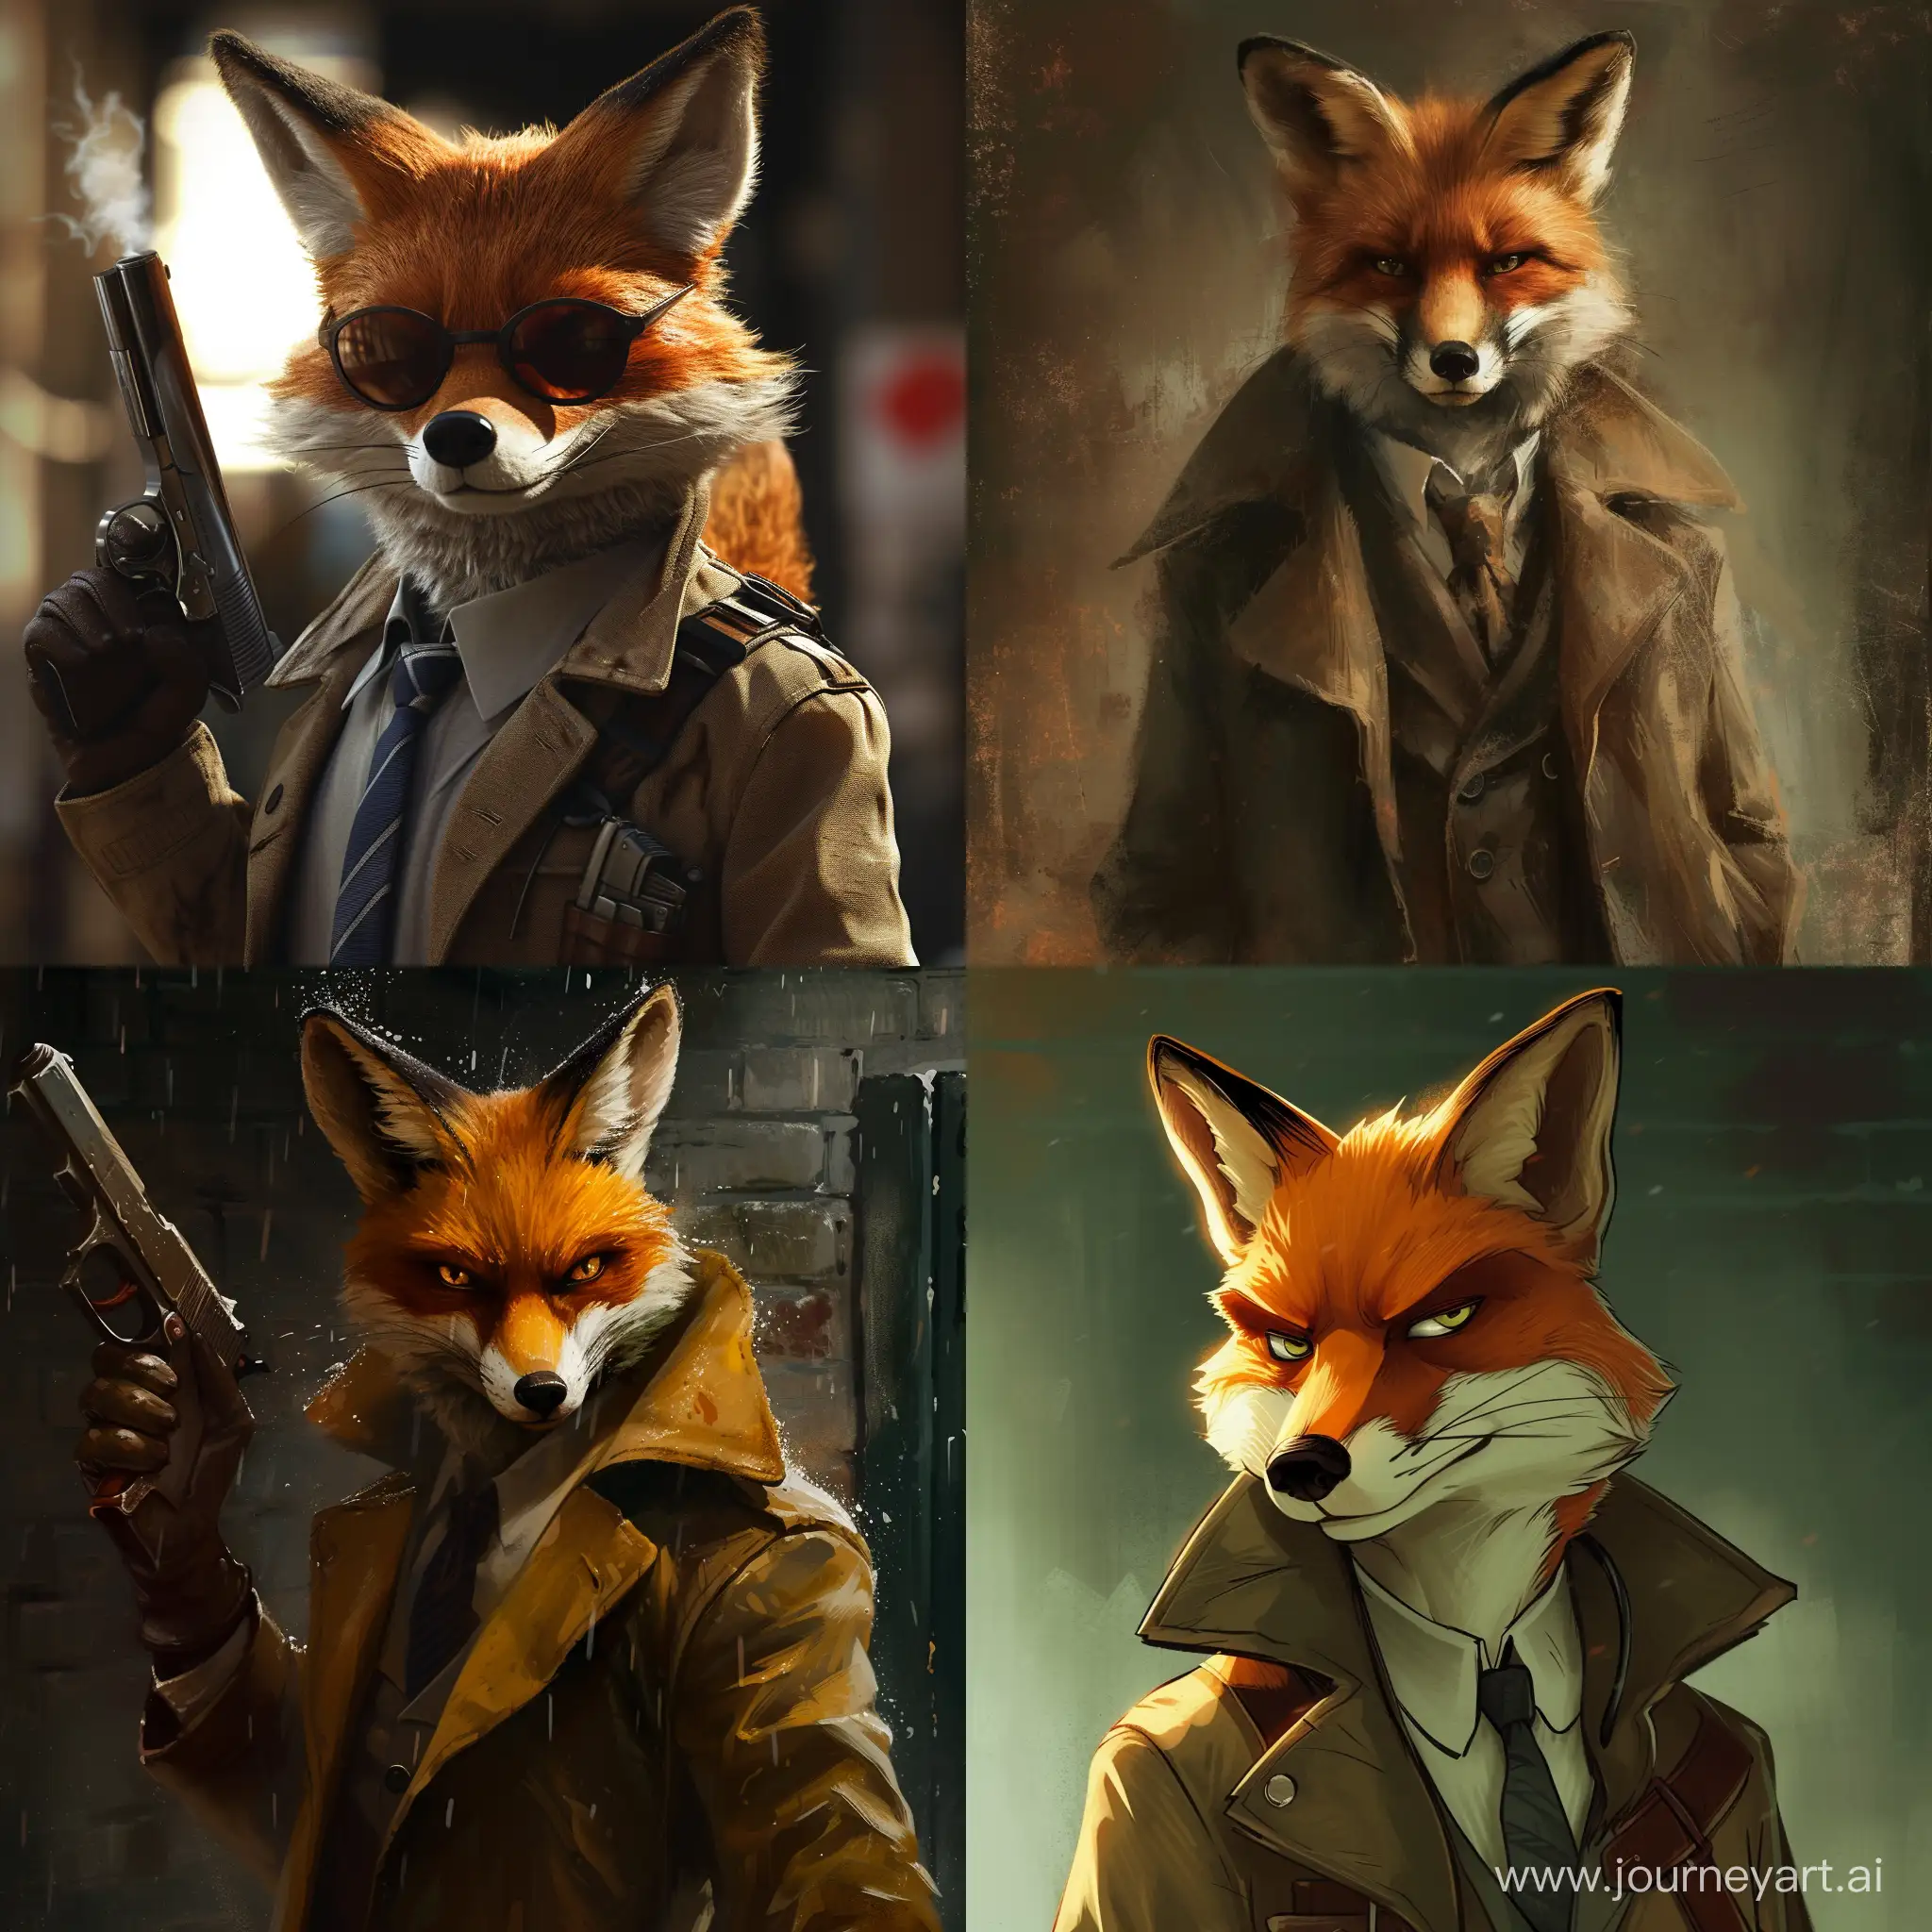 Detective-Fox-Protection-Vigilant-Guardian-in-Action